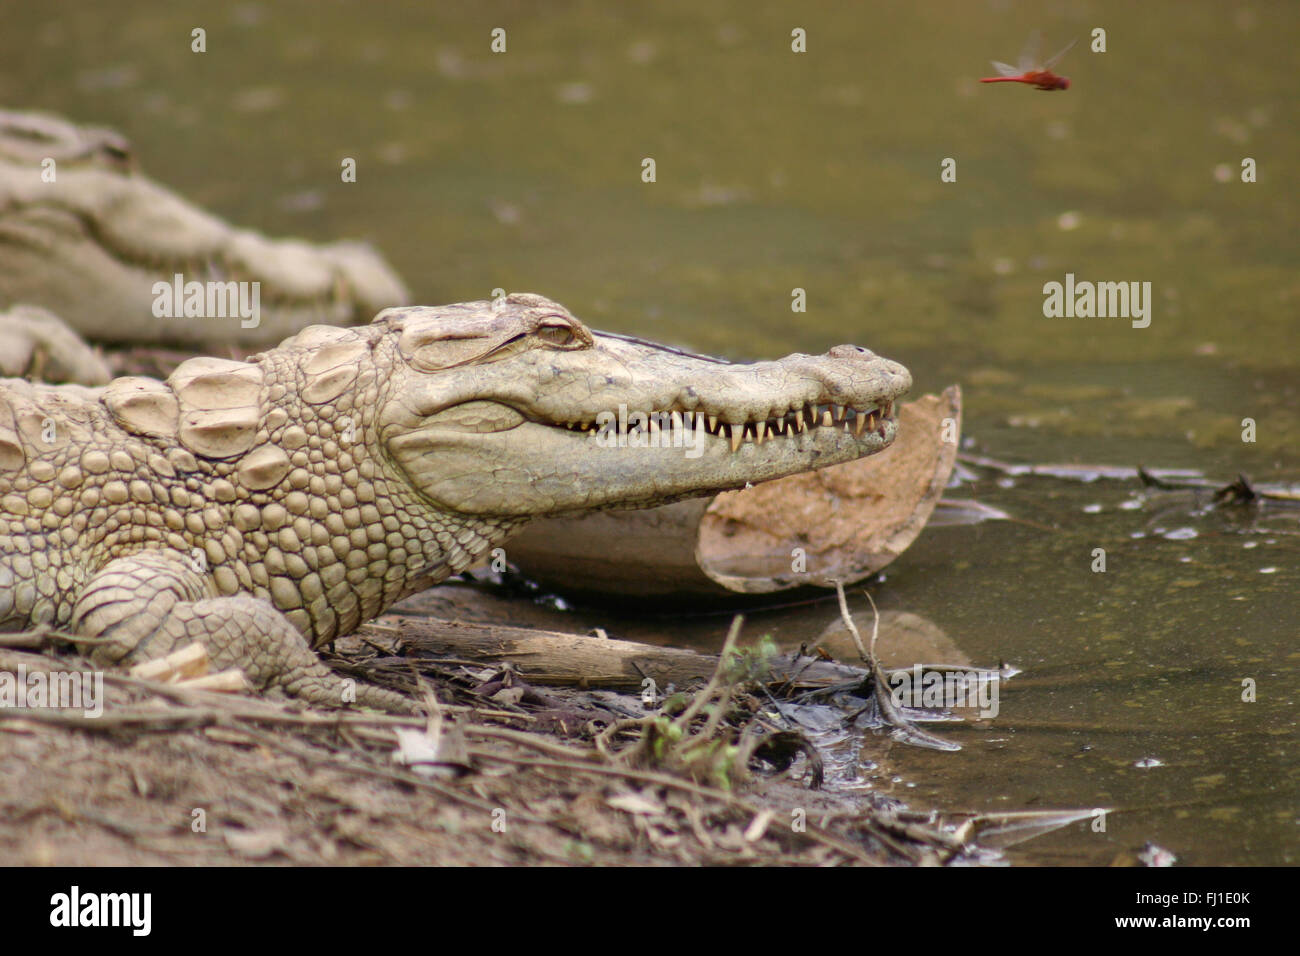 Crocodiles in Dogon country, Mali - Stock Photo